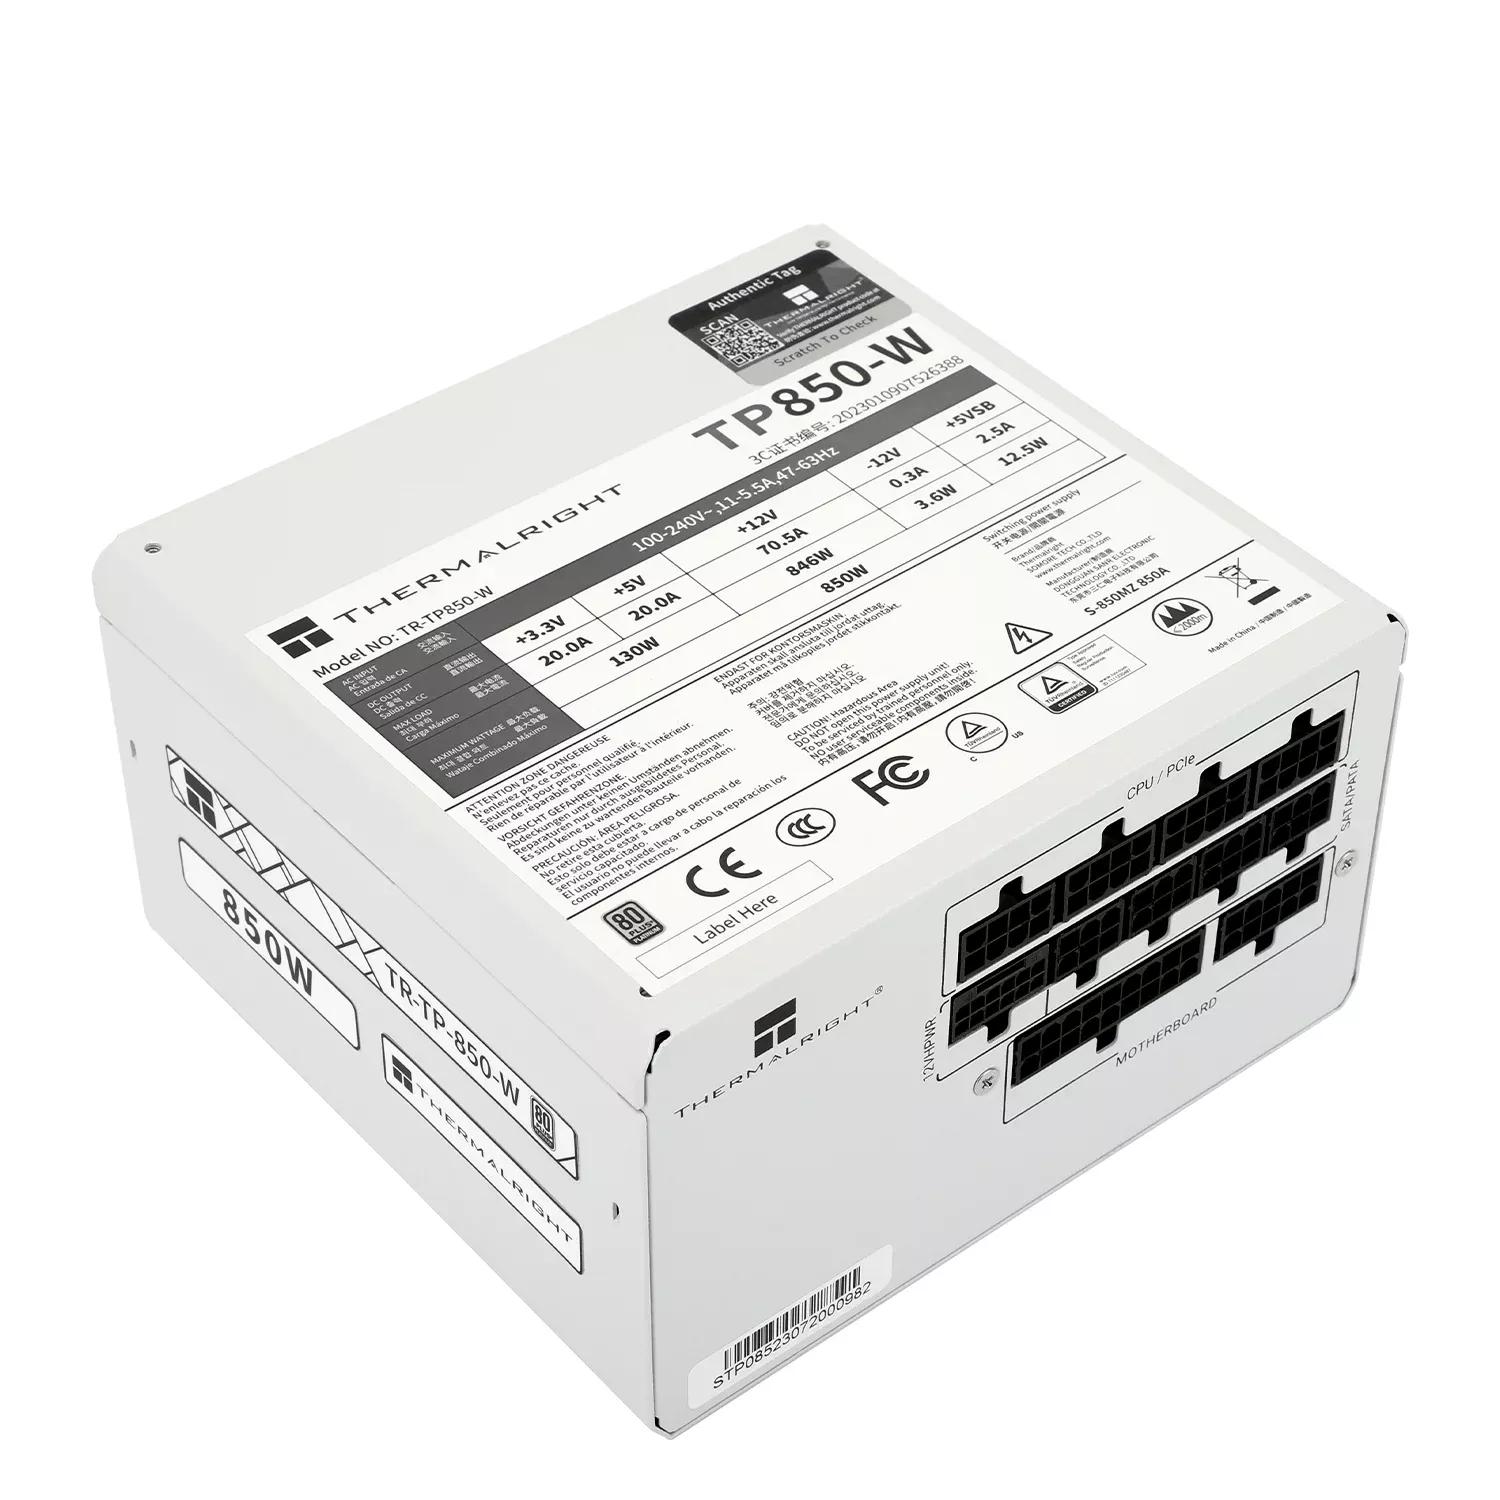 Thermalright TG-850W 80+ Platinum Fully Moduler White Power Supply